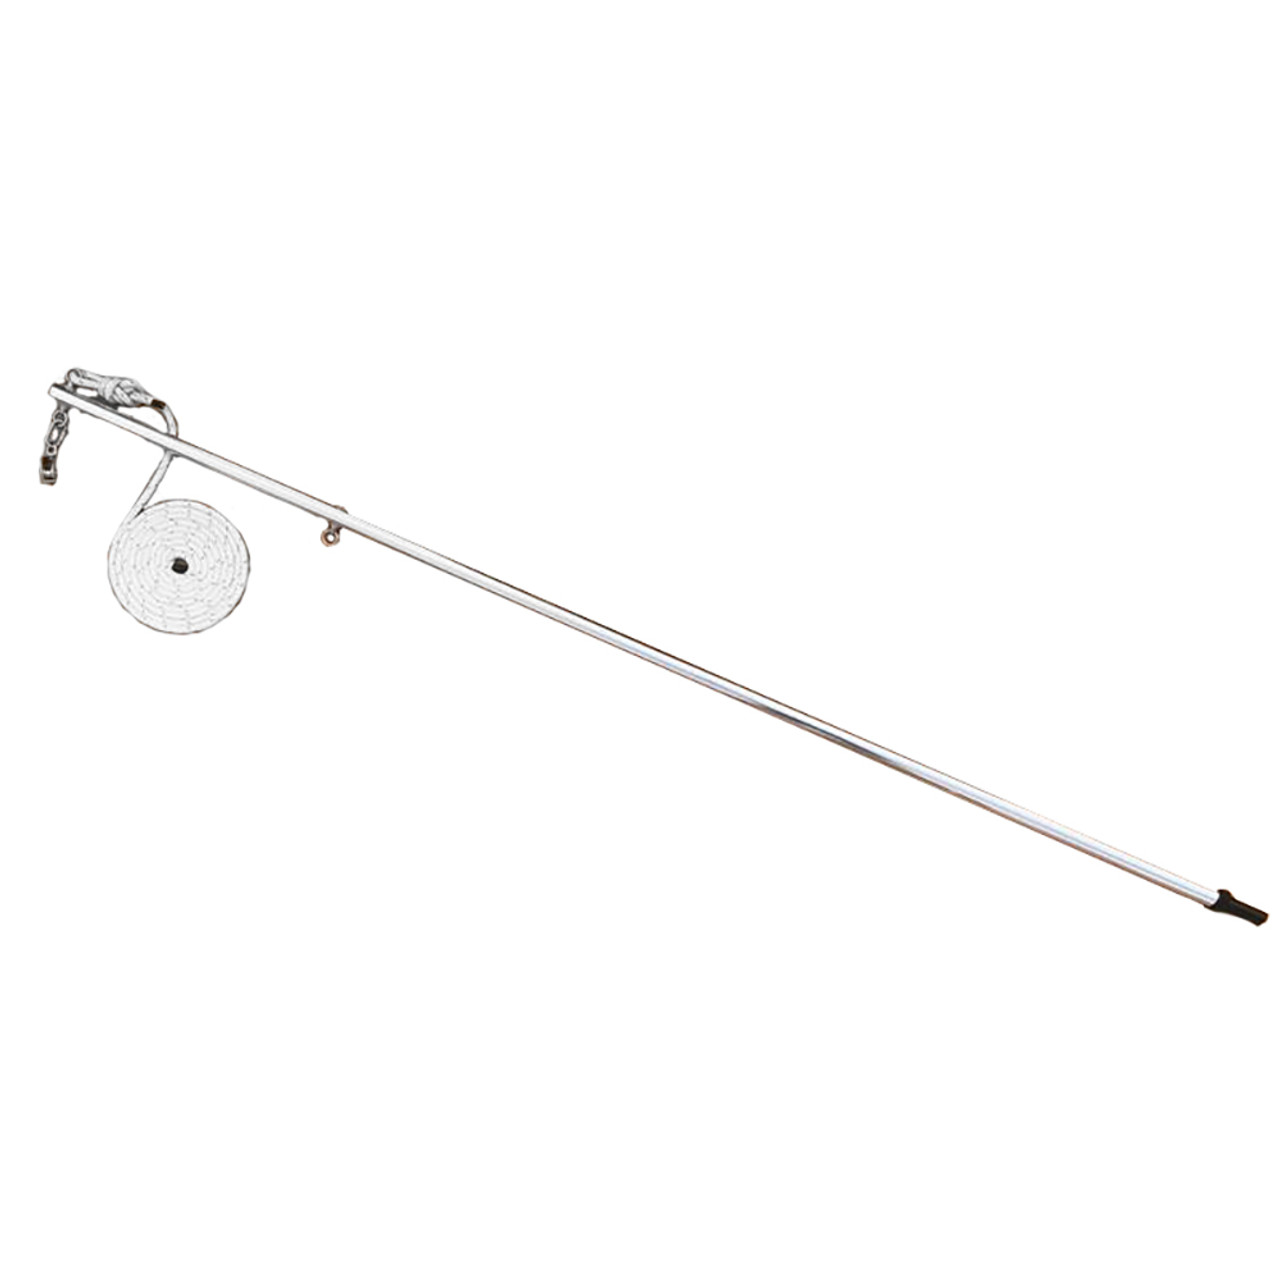 Lee's Tackle Rod & Reel Ceiling Hanger